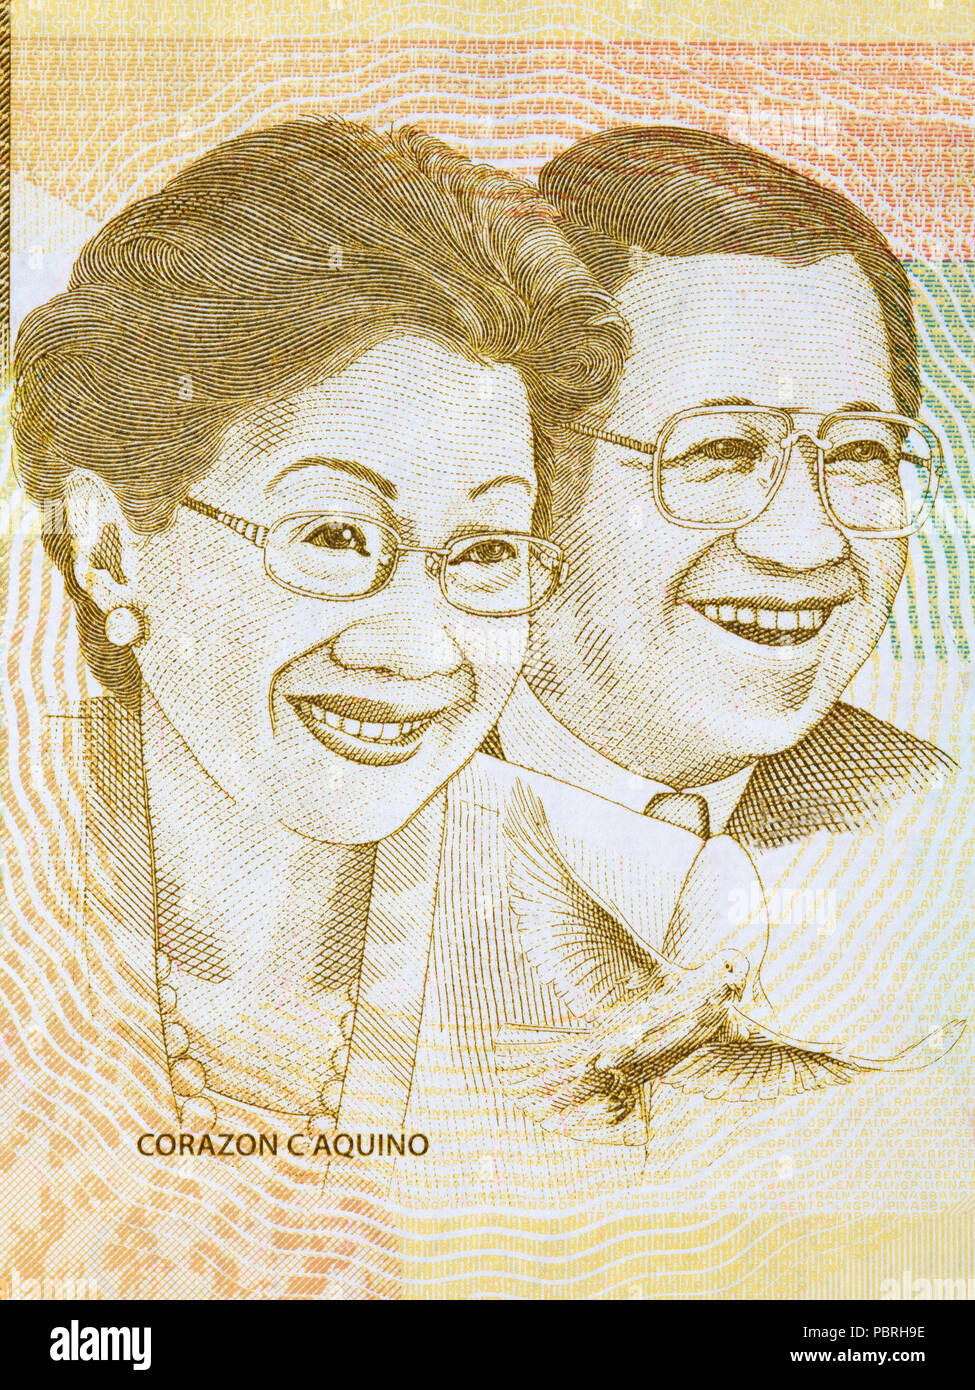 Corazon C. Aquino, Benigno Simeon 'Ninoy' Aquino, Jr portrait from Philippine peso Stock Photo